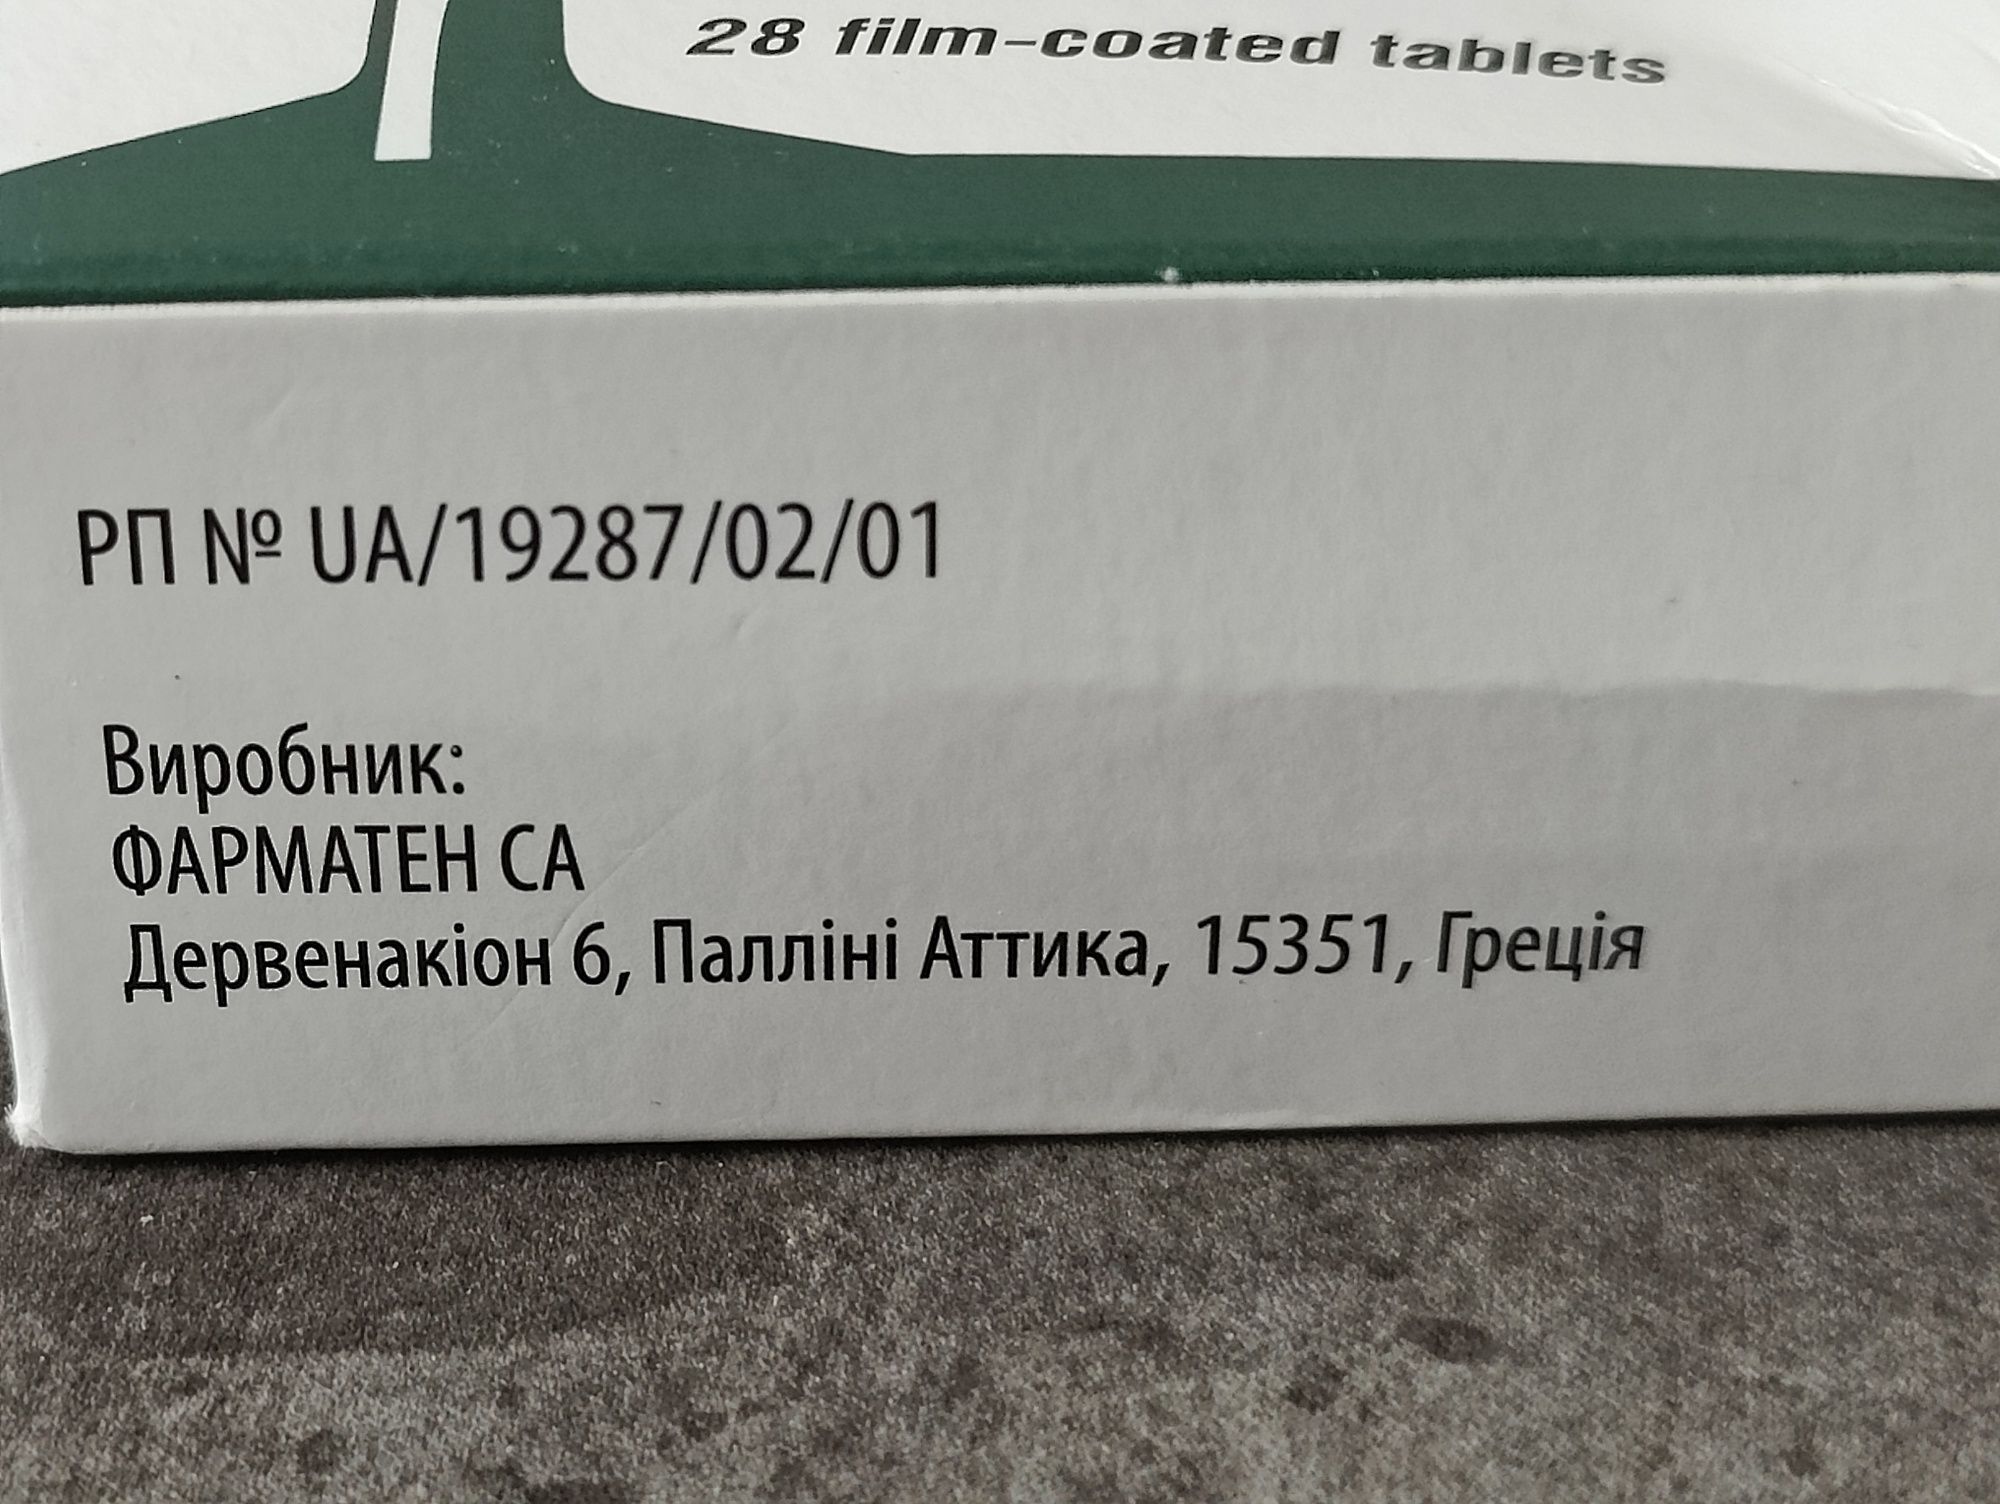 Бонабласт ( Bonablast ) таблетки по 50 мг  1 упаковка (Нова )